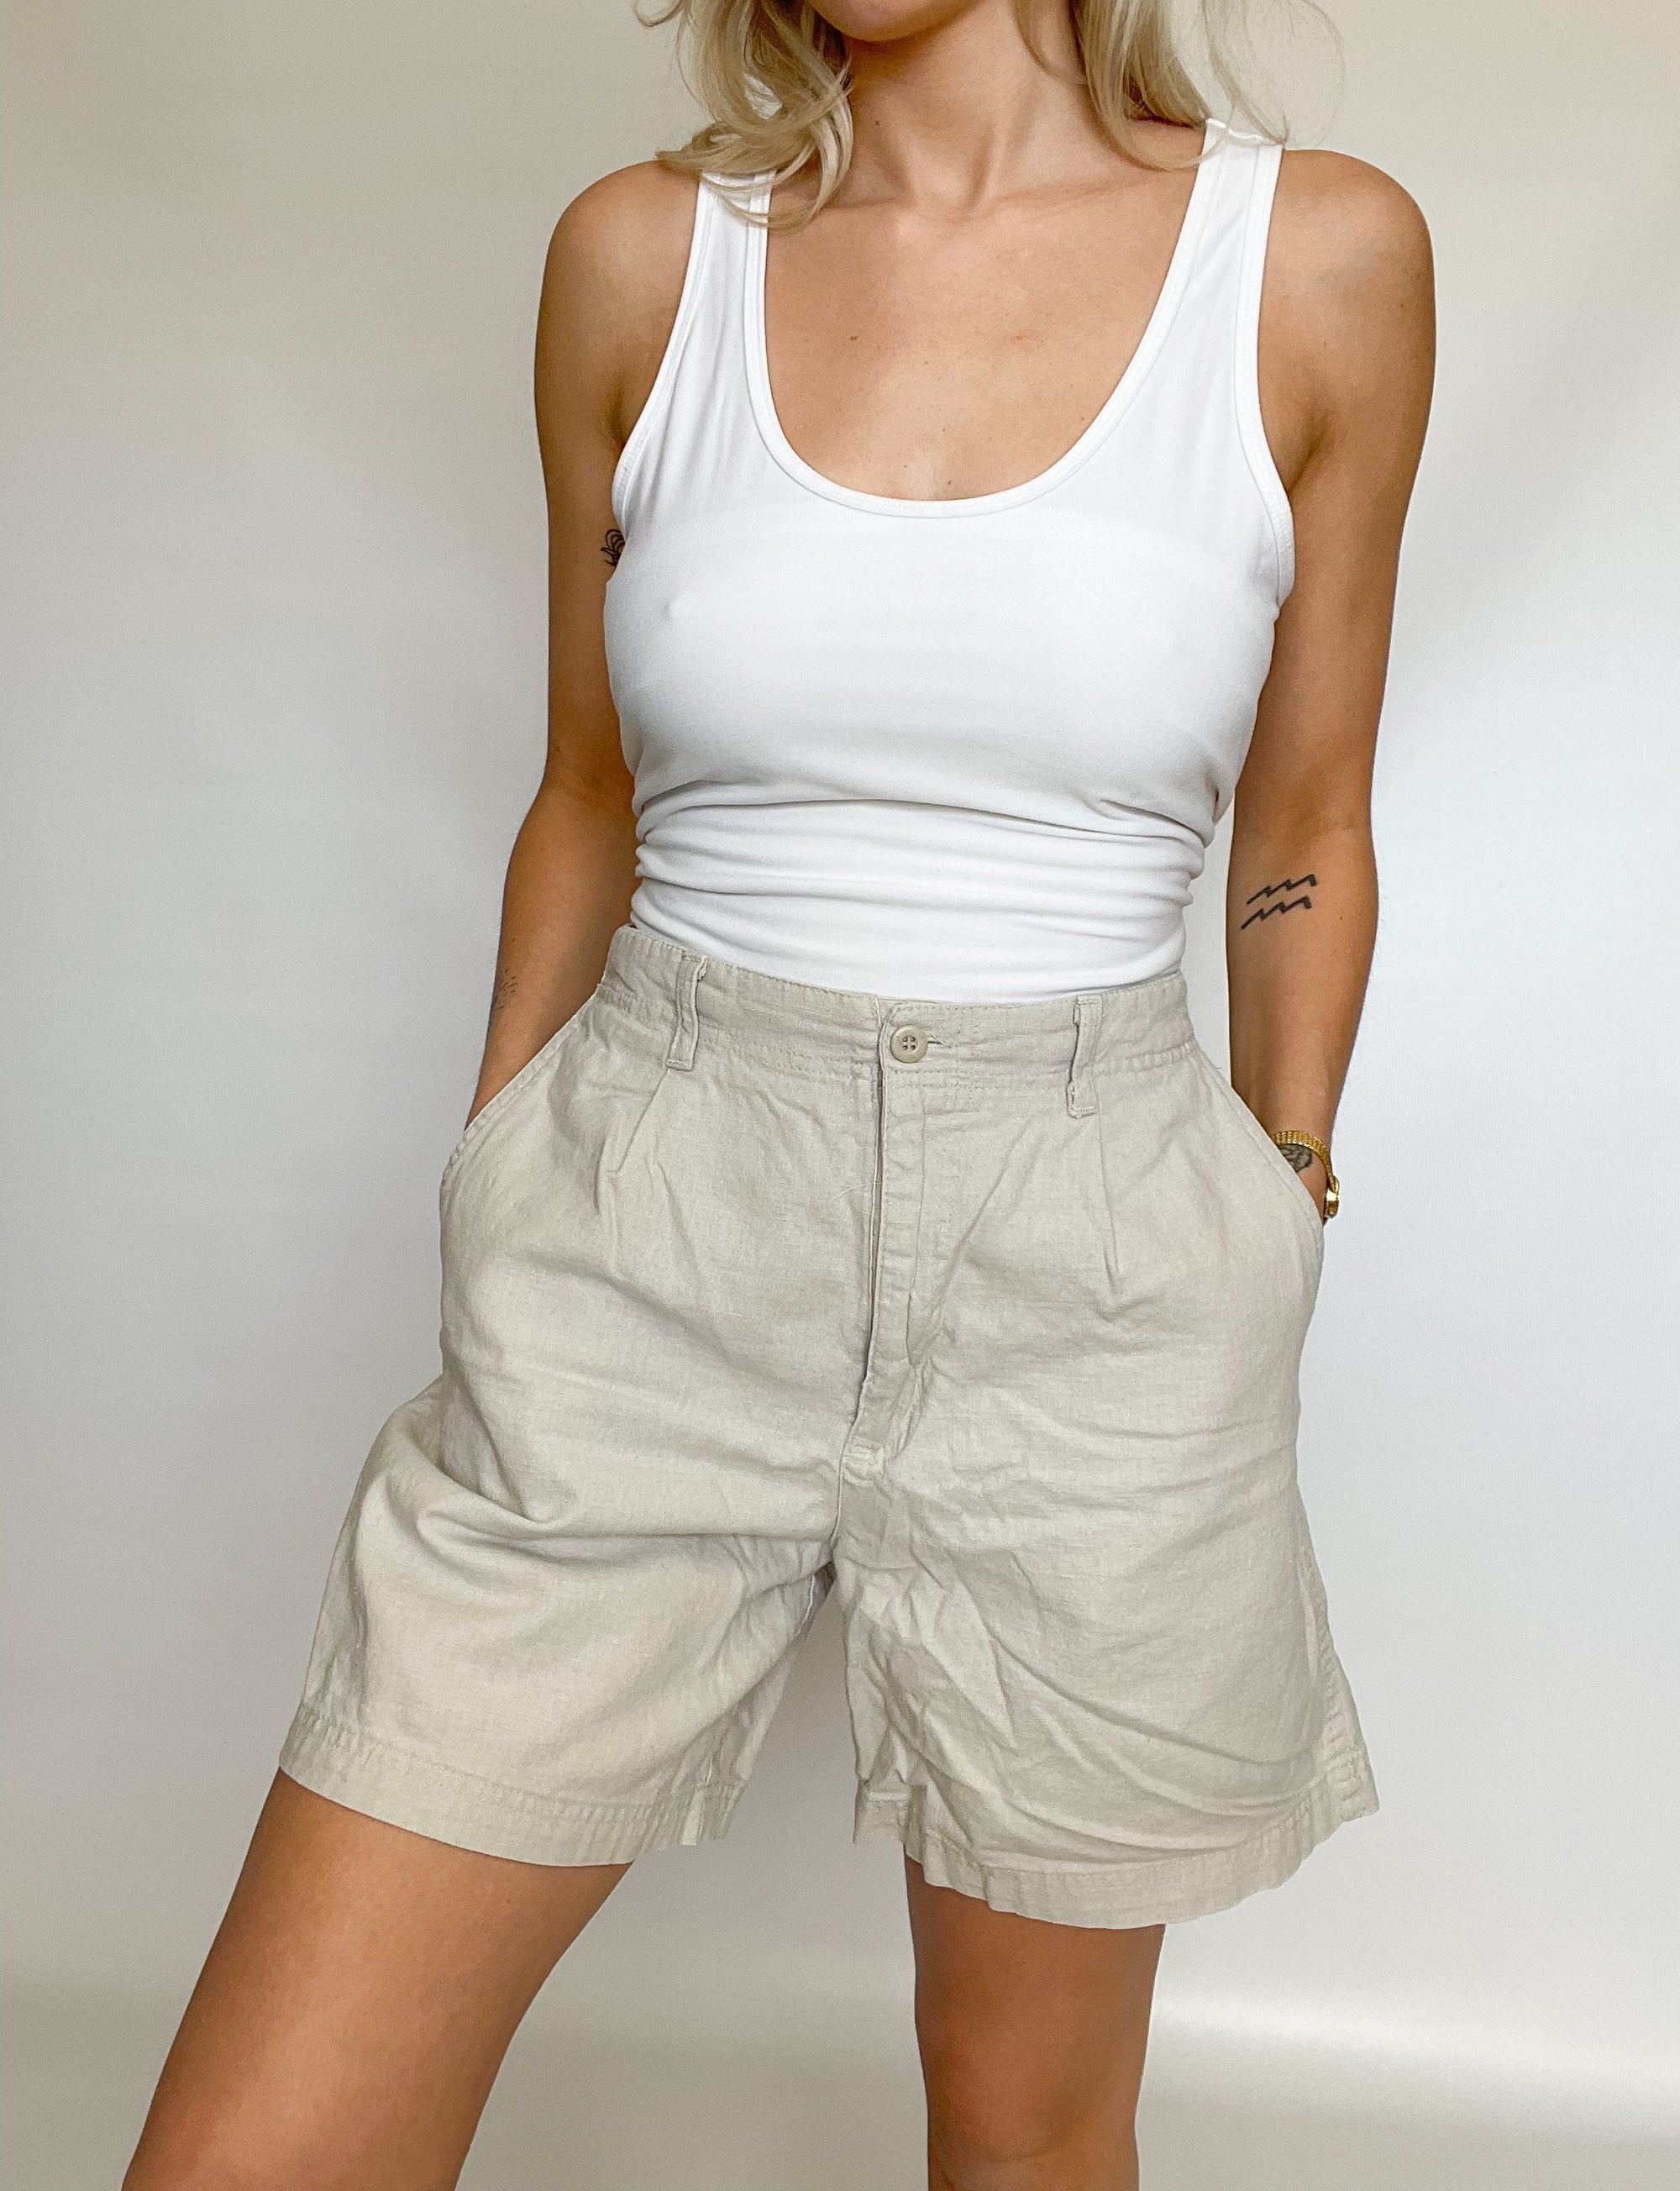 Tan Linen Shorts